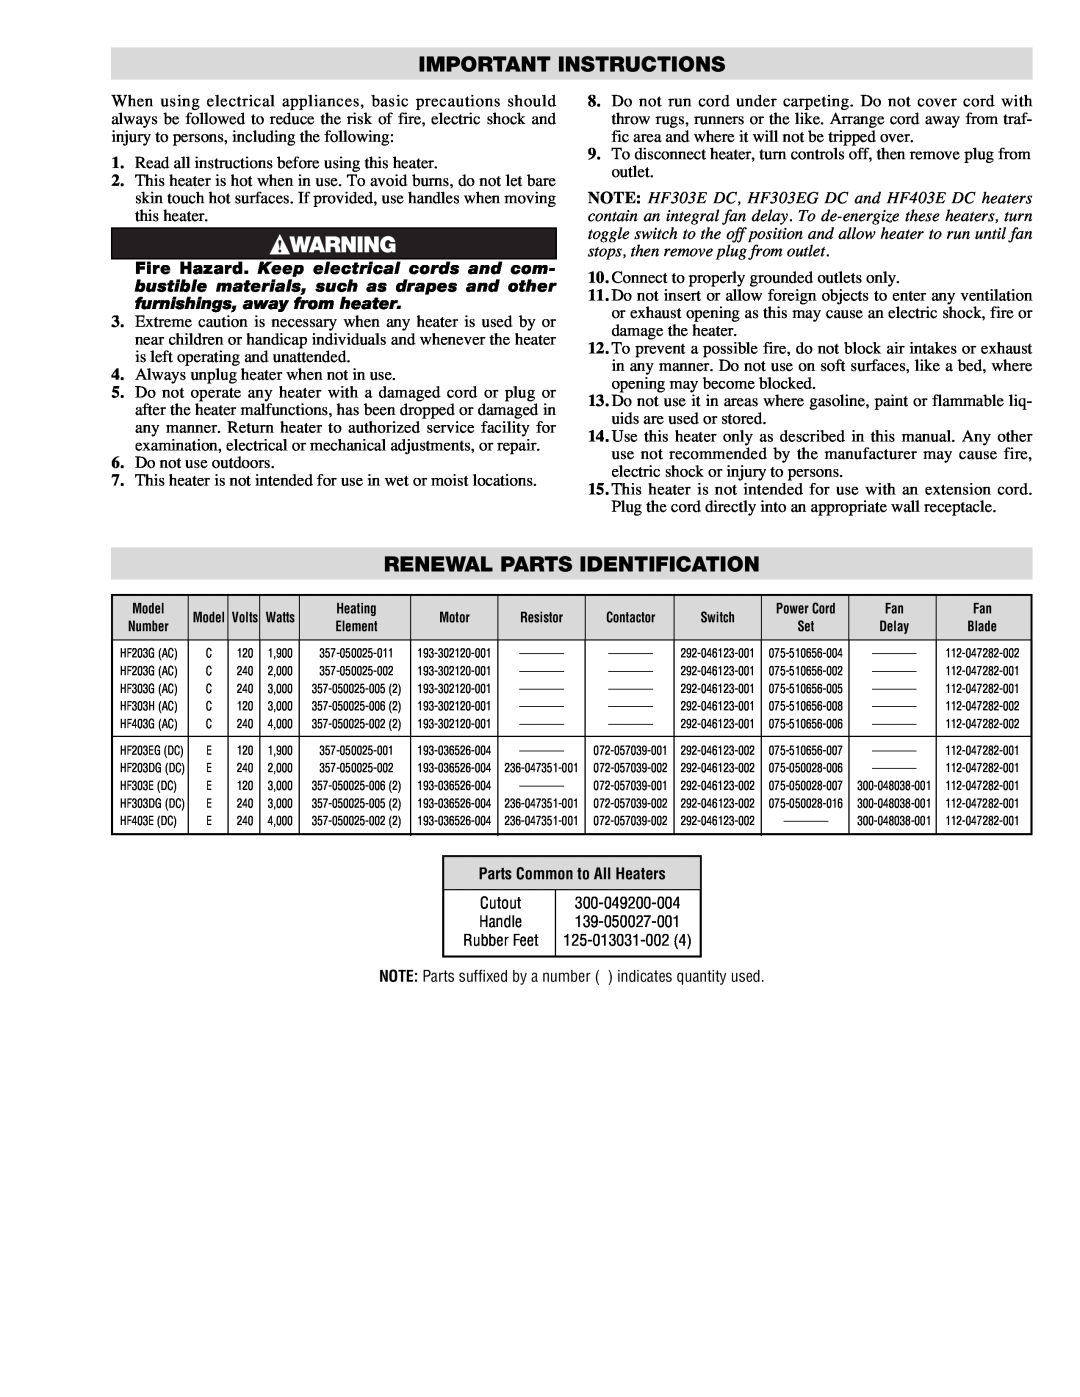 Chromalox PF411-10 installation instructions Important Instructions, Renewal Parts Identification 